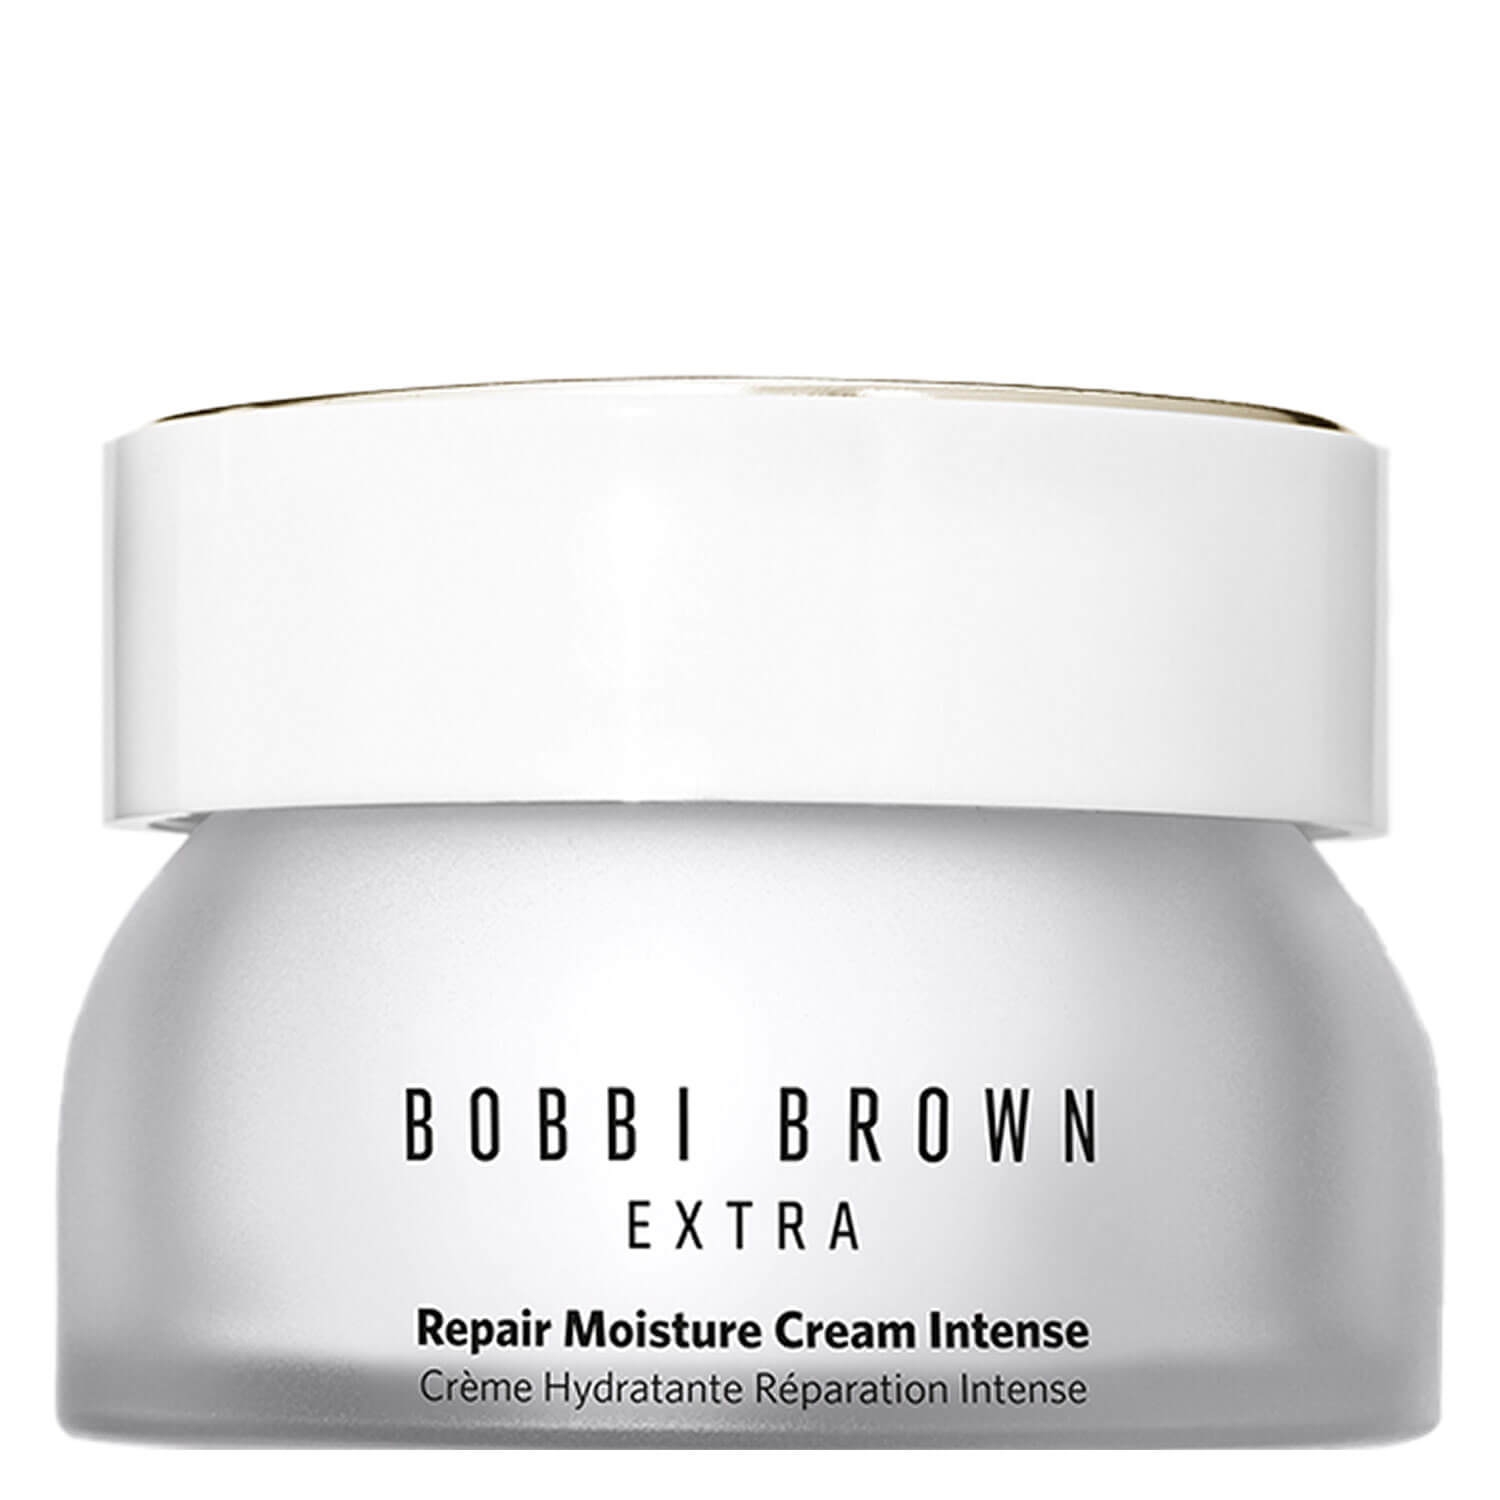 Produktbild von BB Skincare - EXTRA Repair Moisture Cream Intense